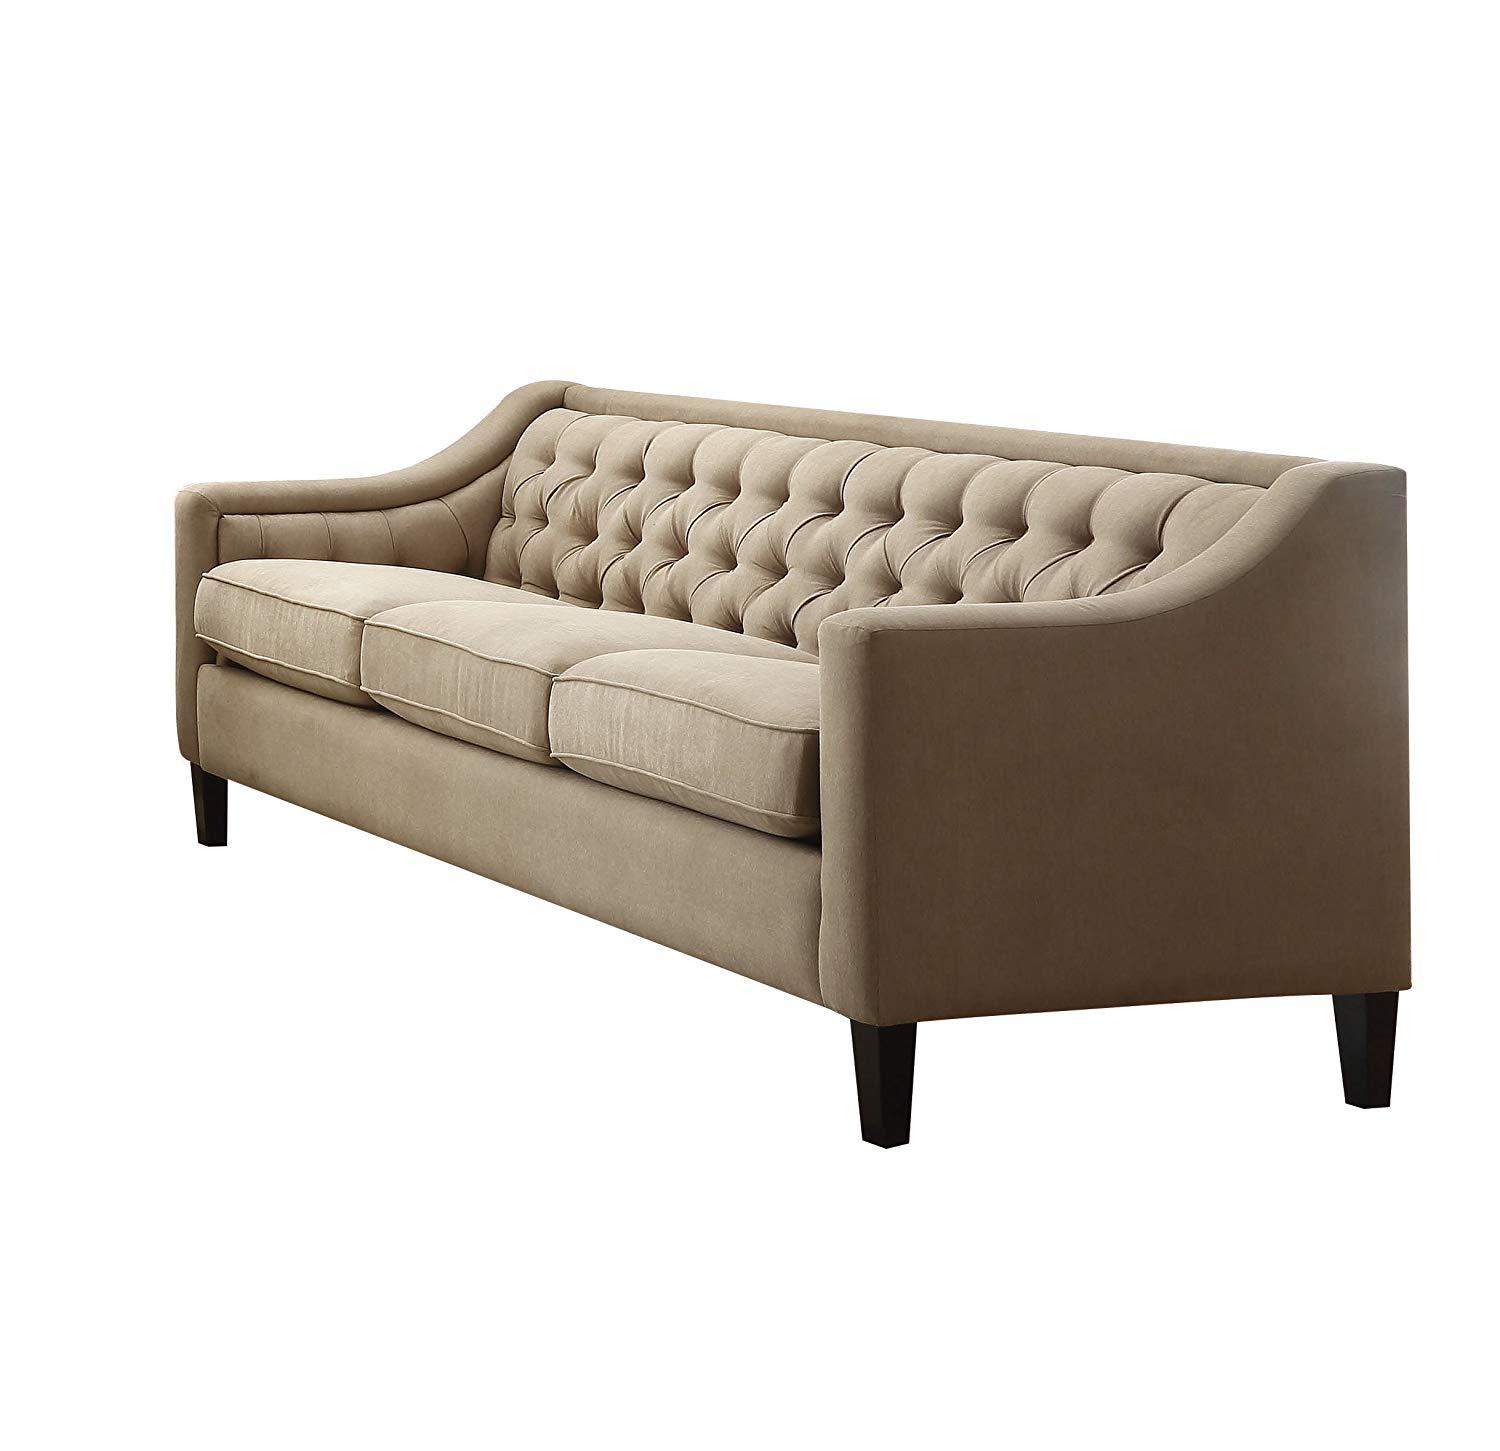 Contemporary Sofas Suzanne-54010 54010 in Beige Fabric